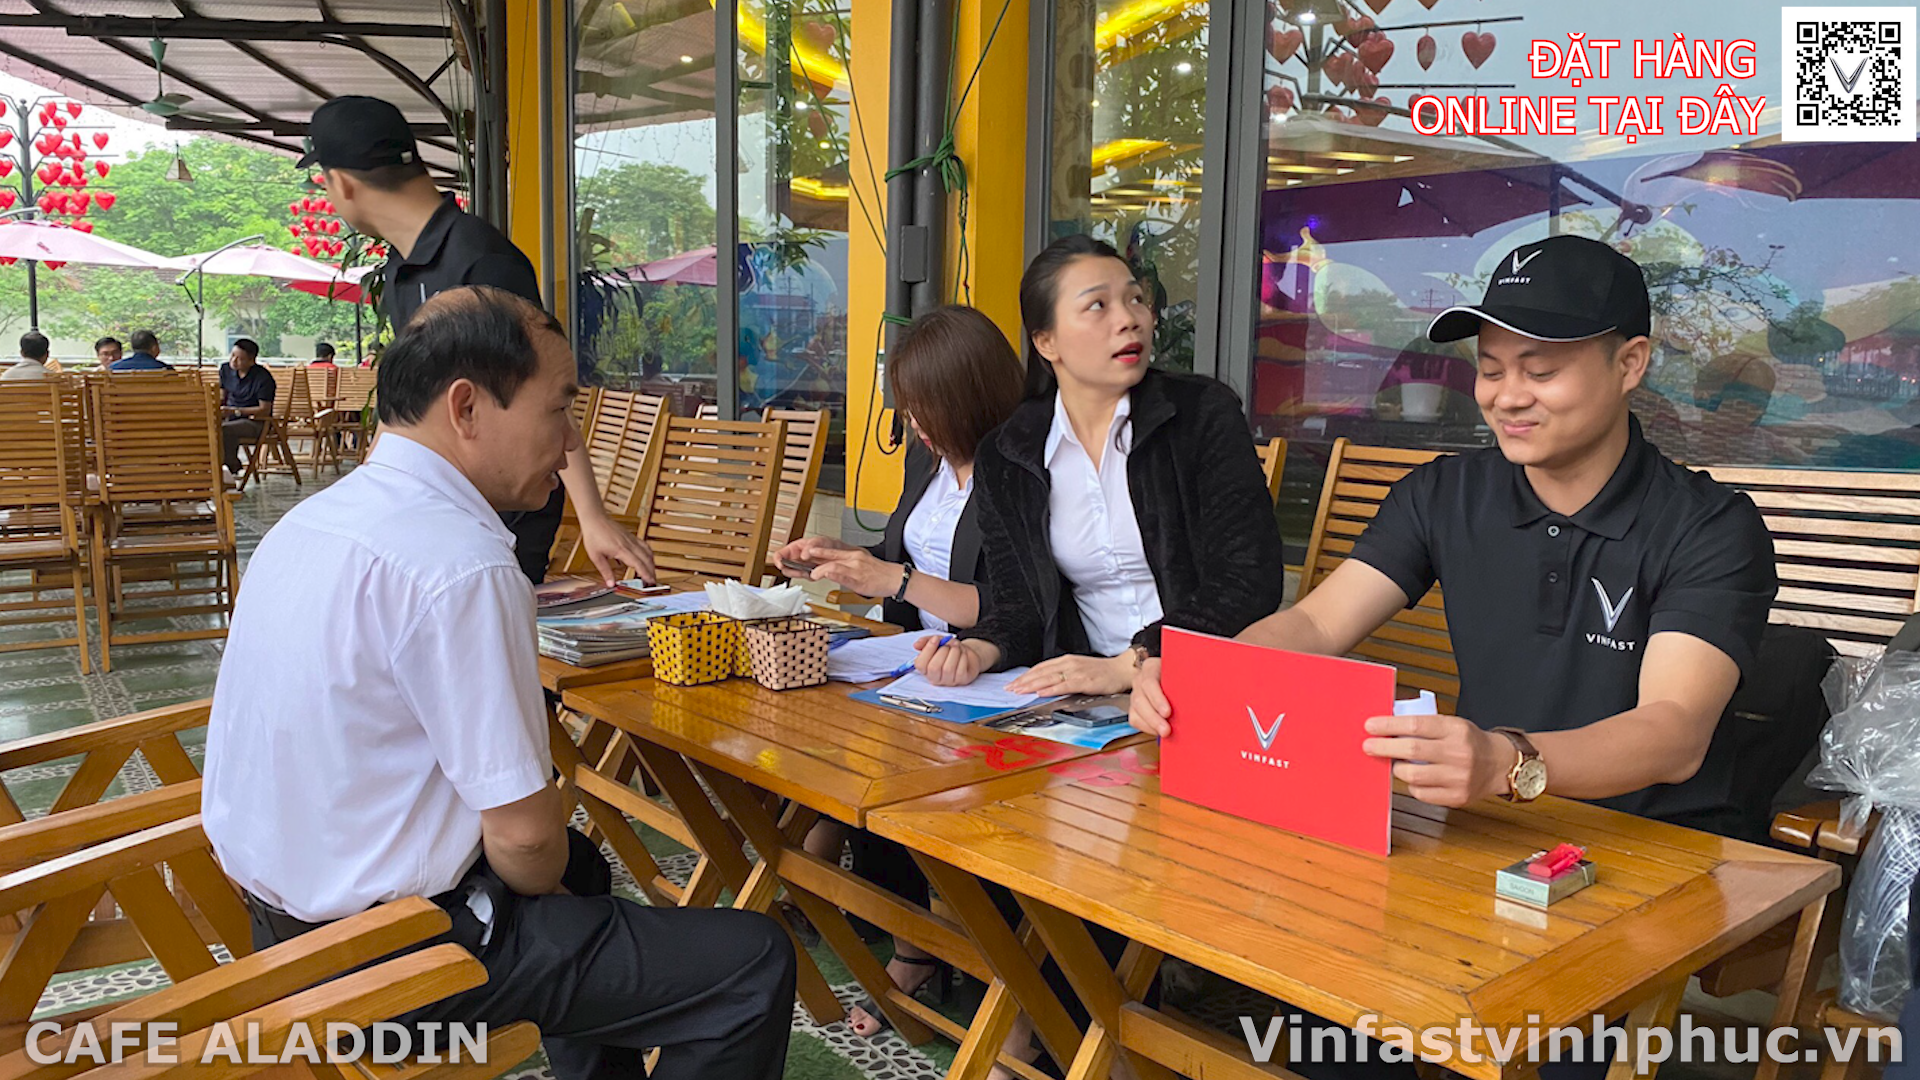 Cafe Aladdin Chuong Trinh Lai Thu Xe Vinfast Vinh Phuc (9)